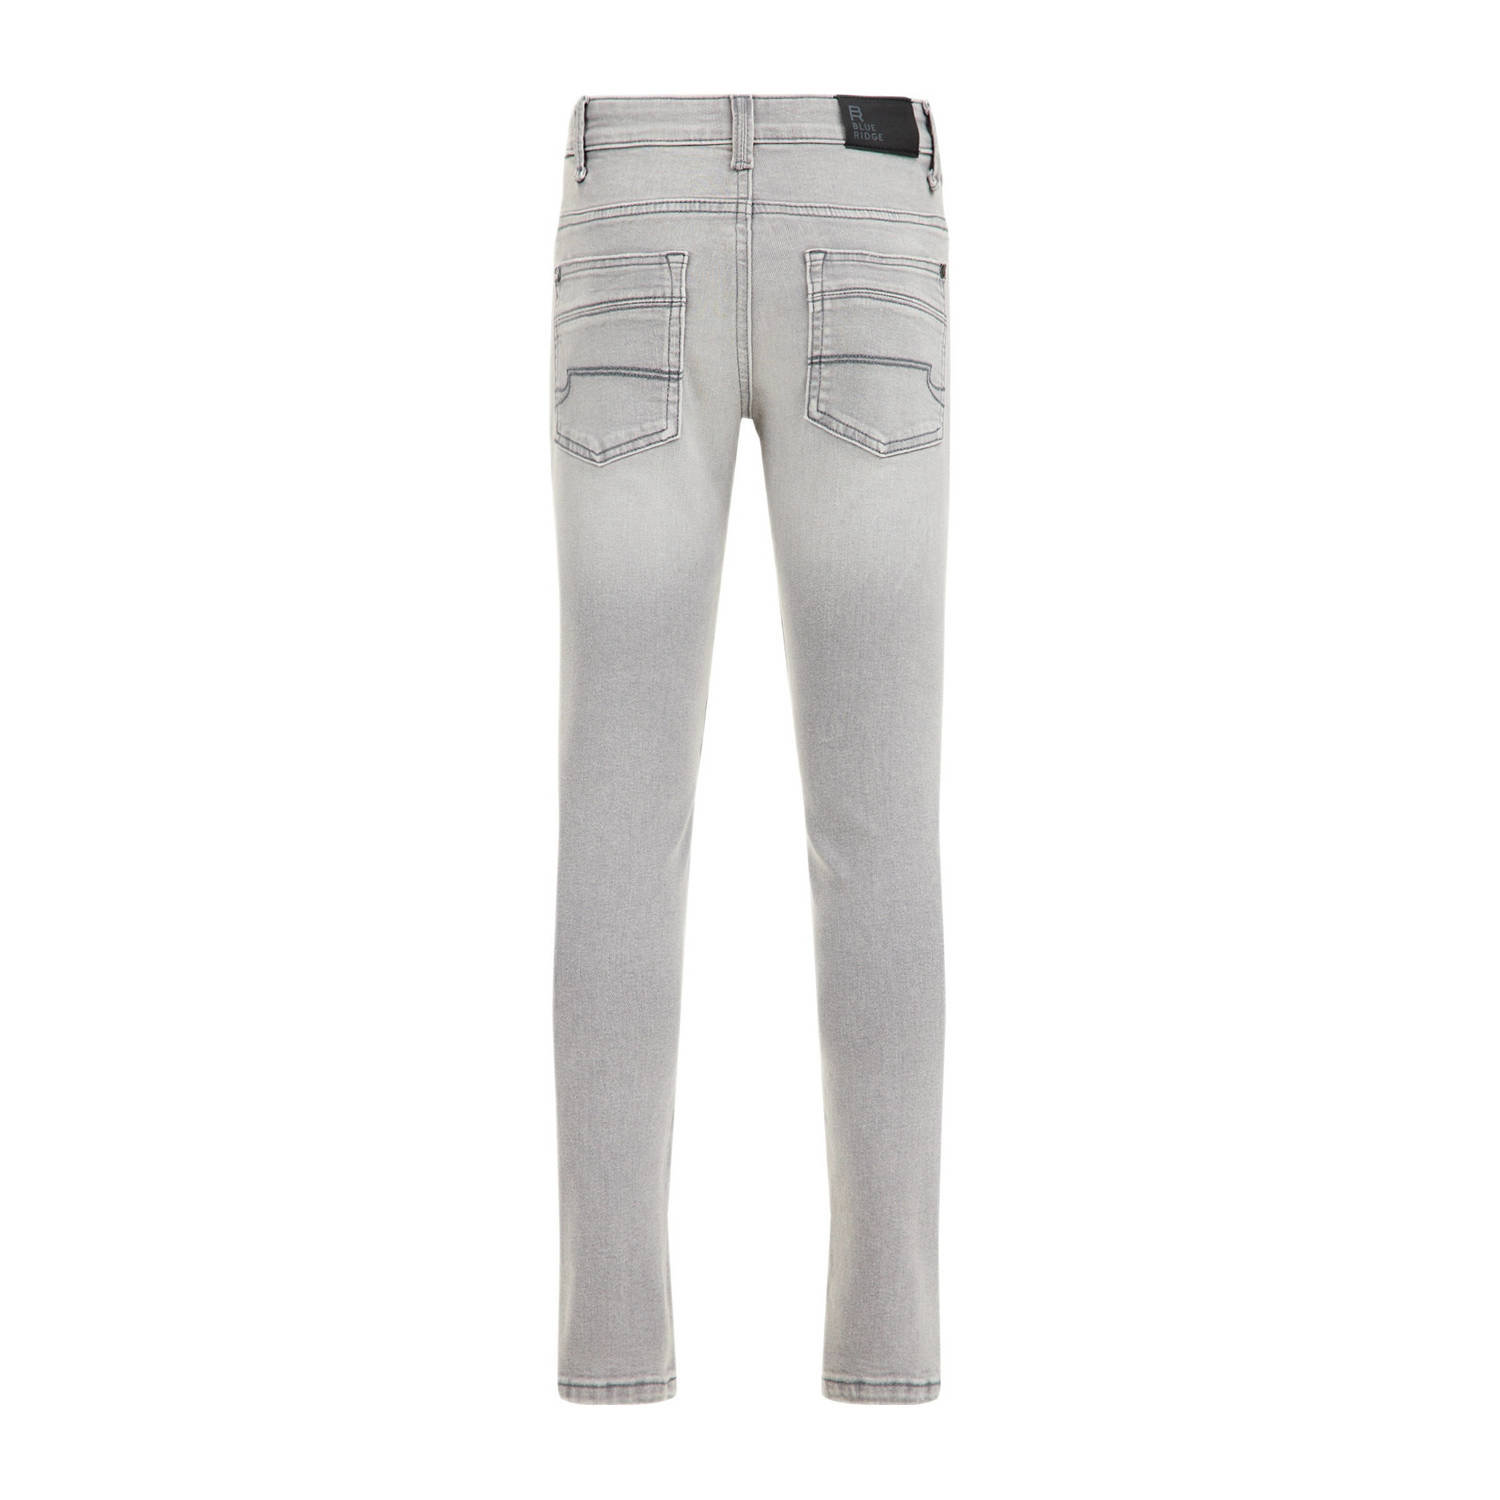 WE Fashion Blue Ridge skinny jeans light grey denim